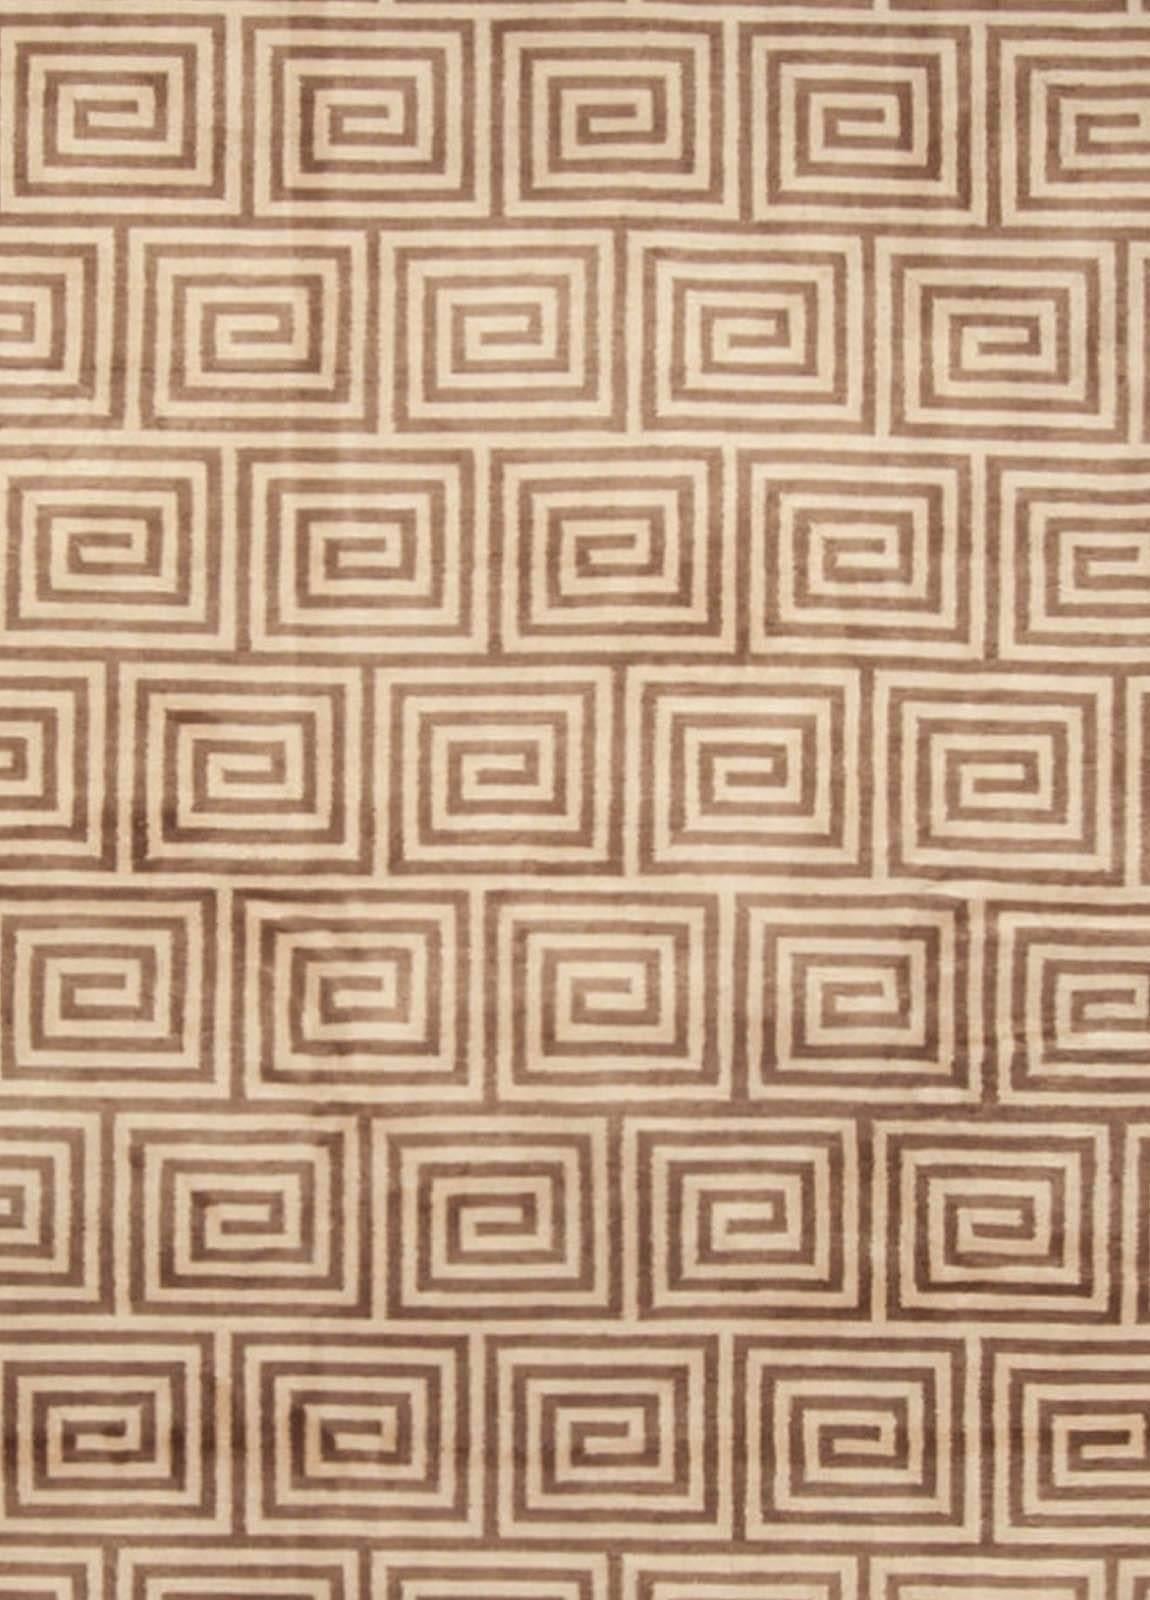 High-quality Prism Art Deco style handmade silk rug by Doris Leslie Blau
Size: 12'10